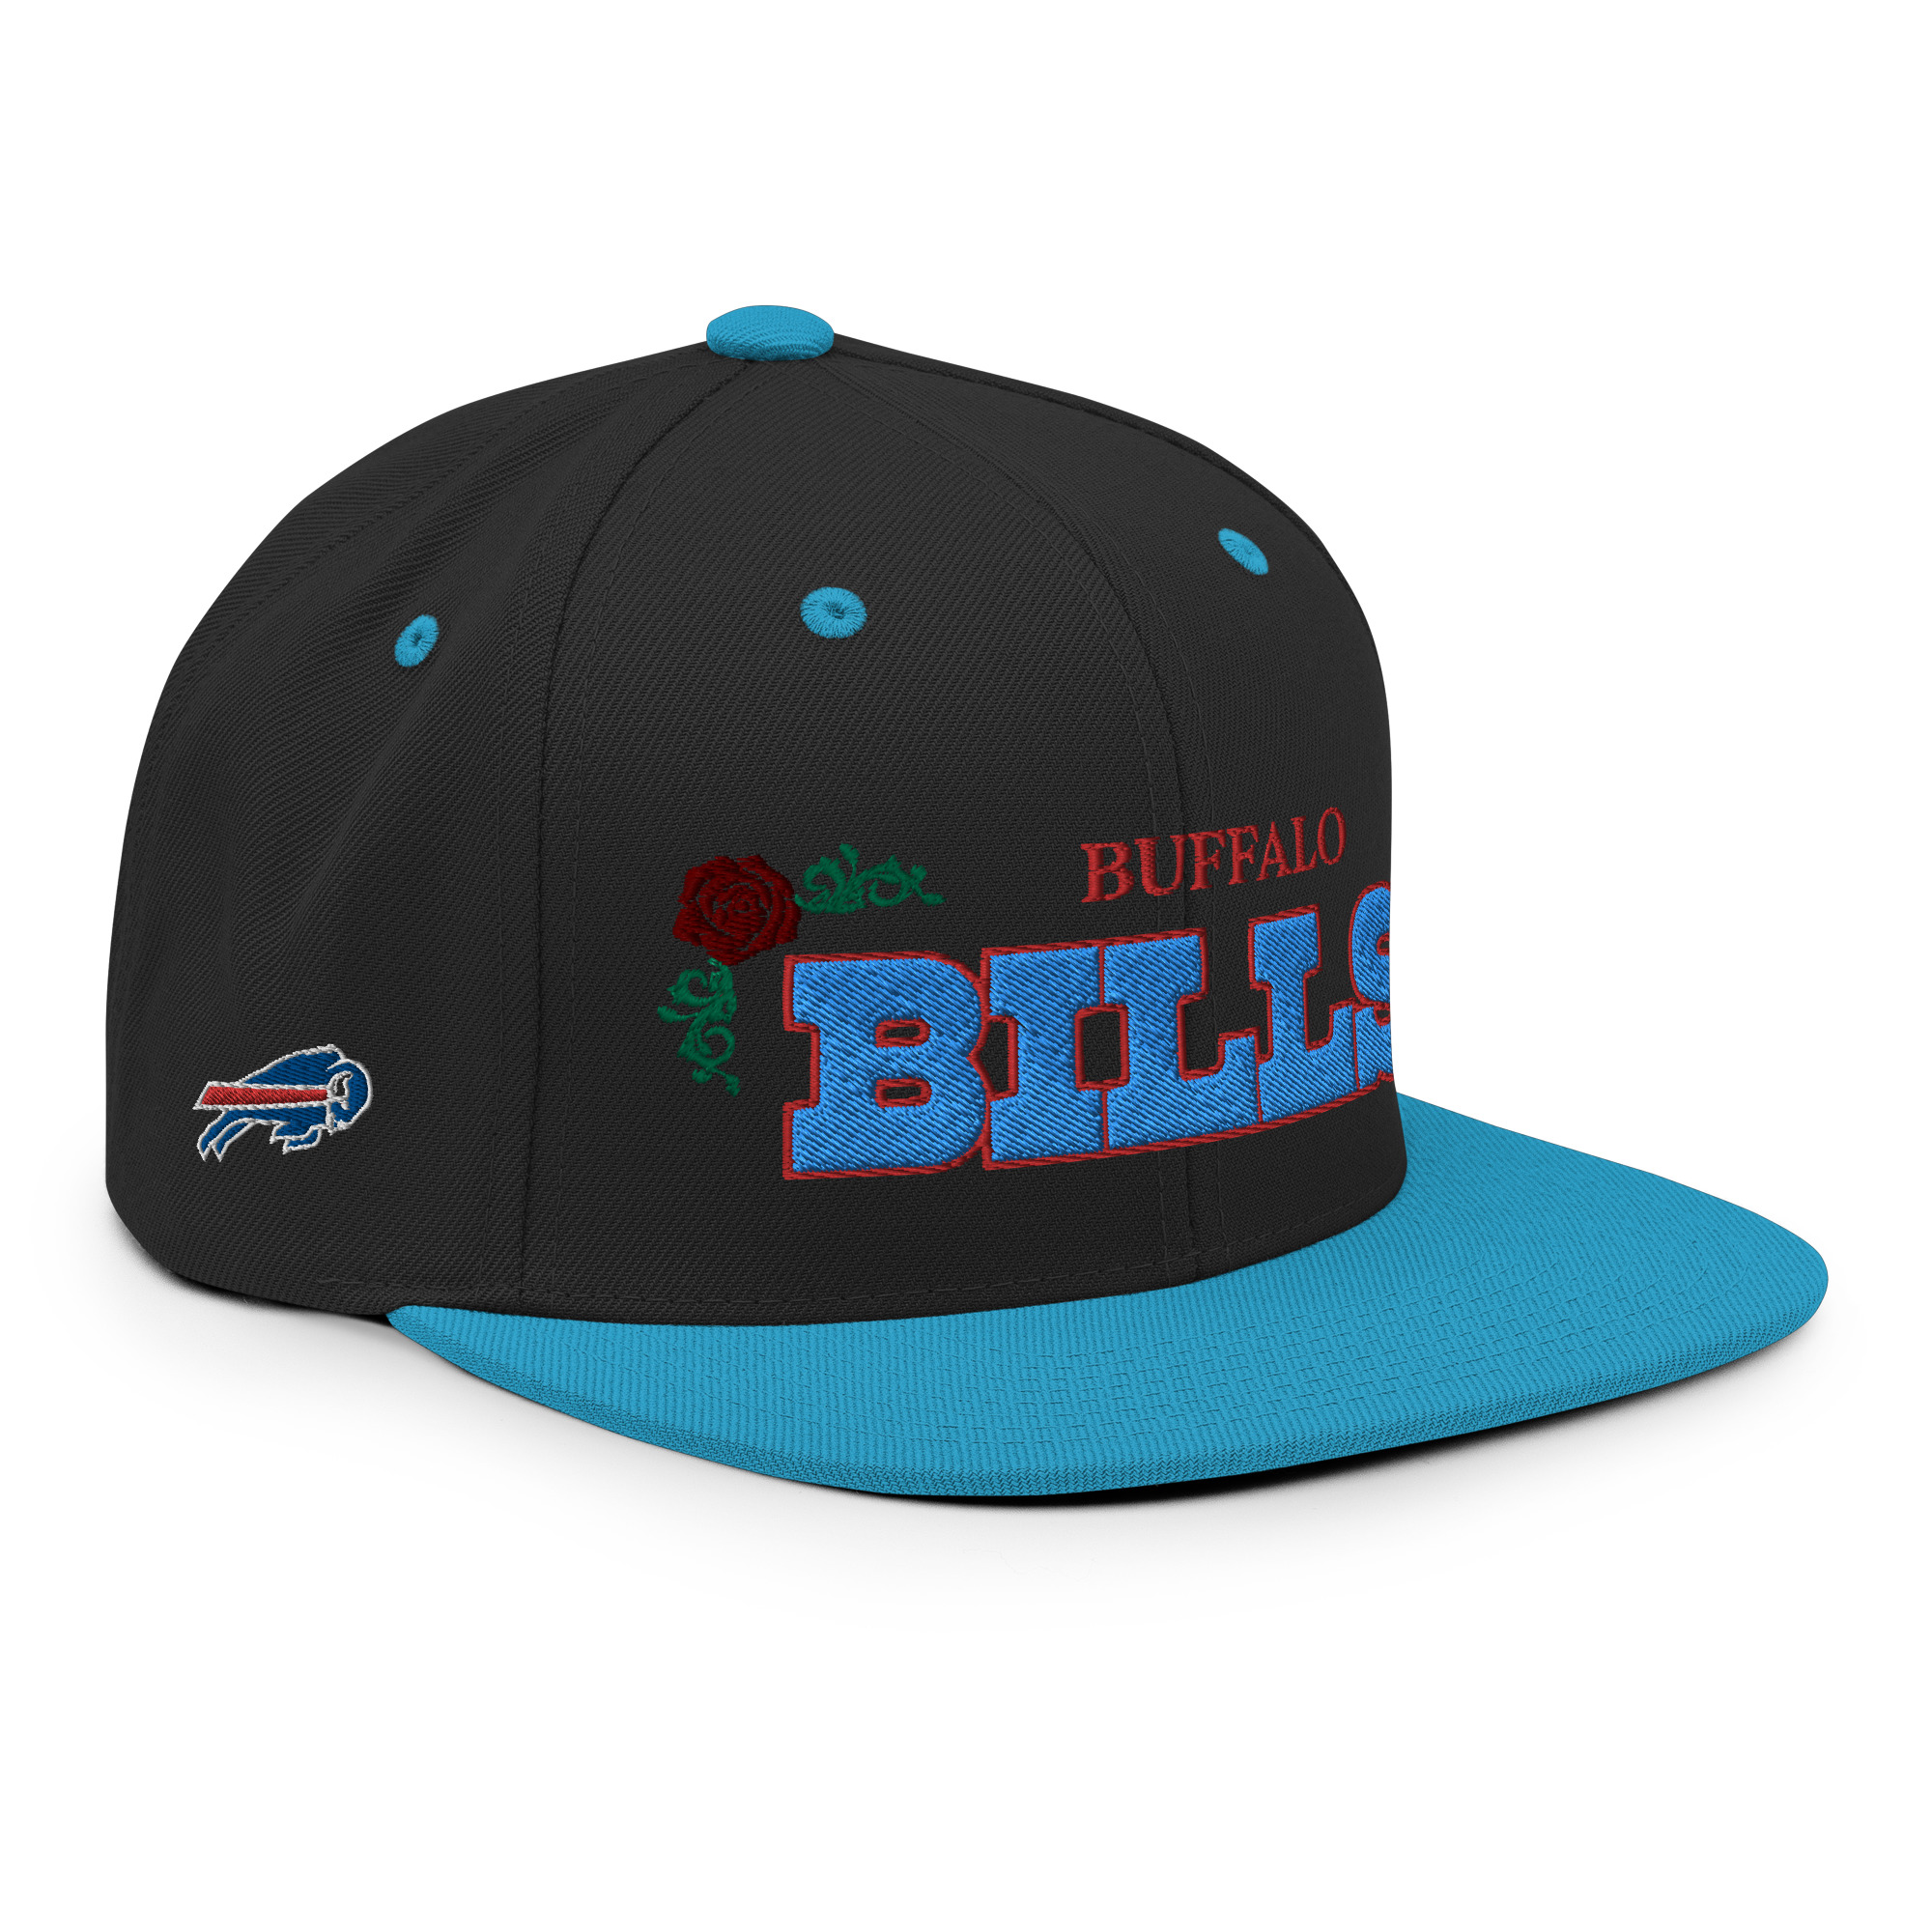 Buffalo Bills Yoo Snapback Hat